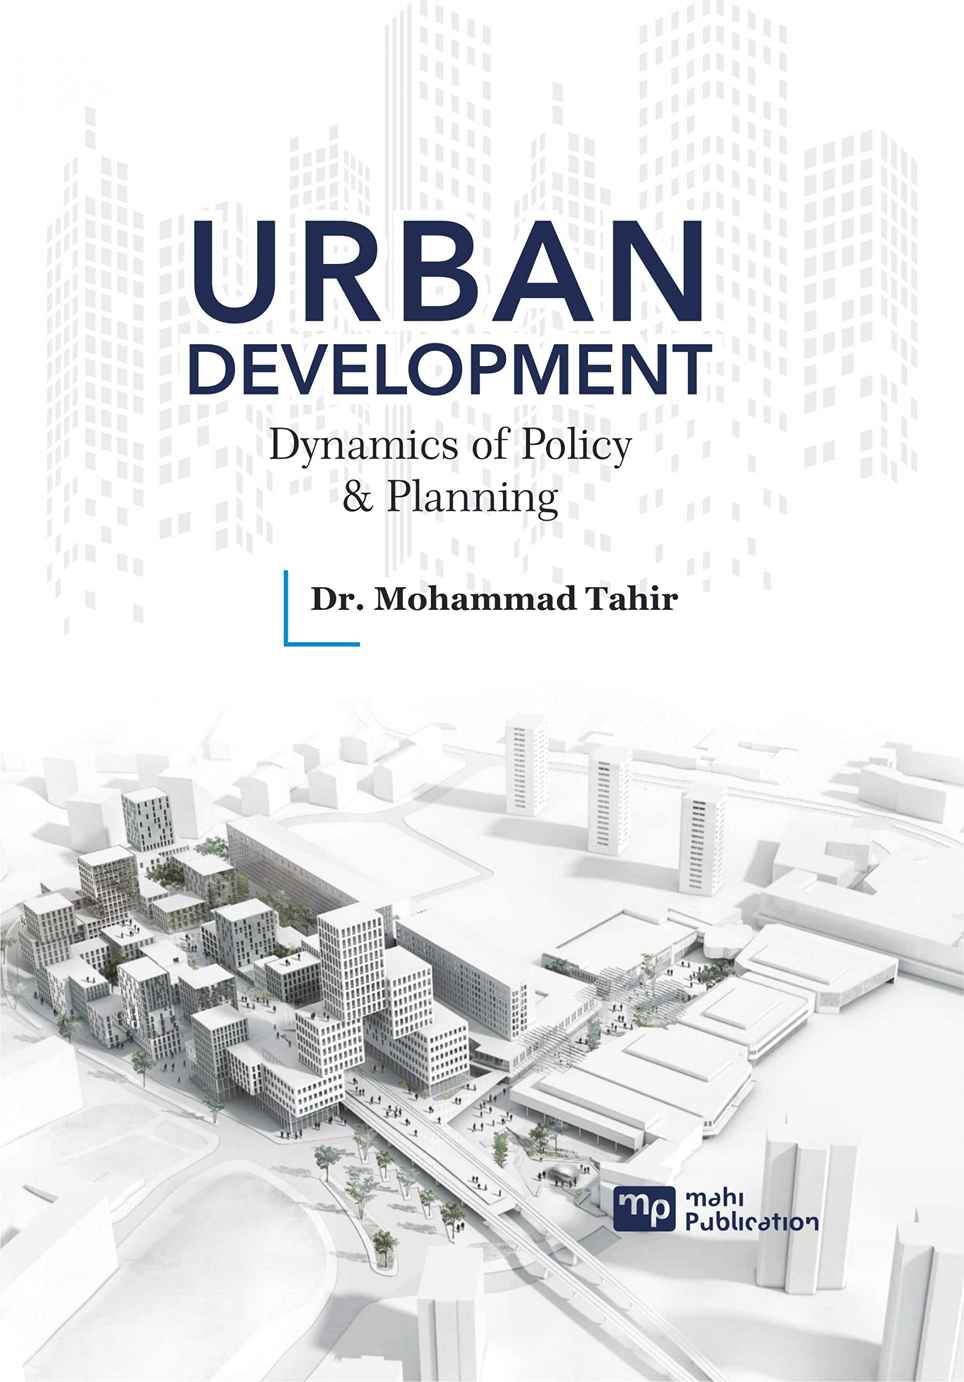 Urban Development Dynamics of Policy & Planning